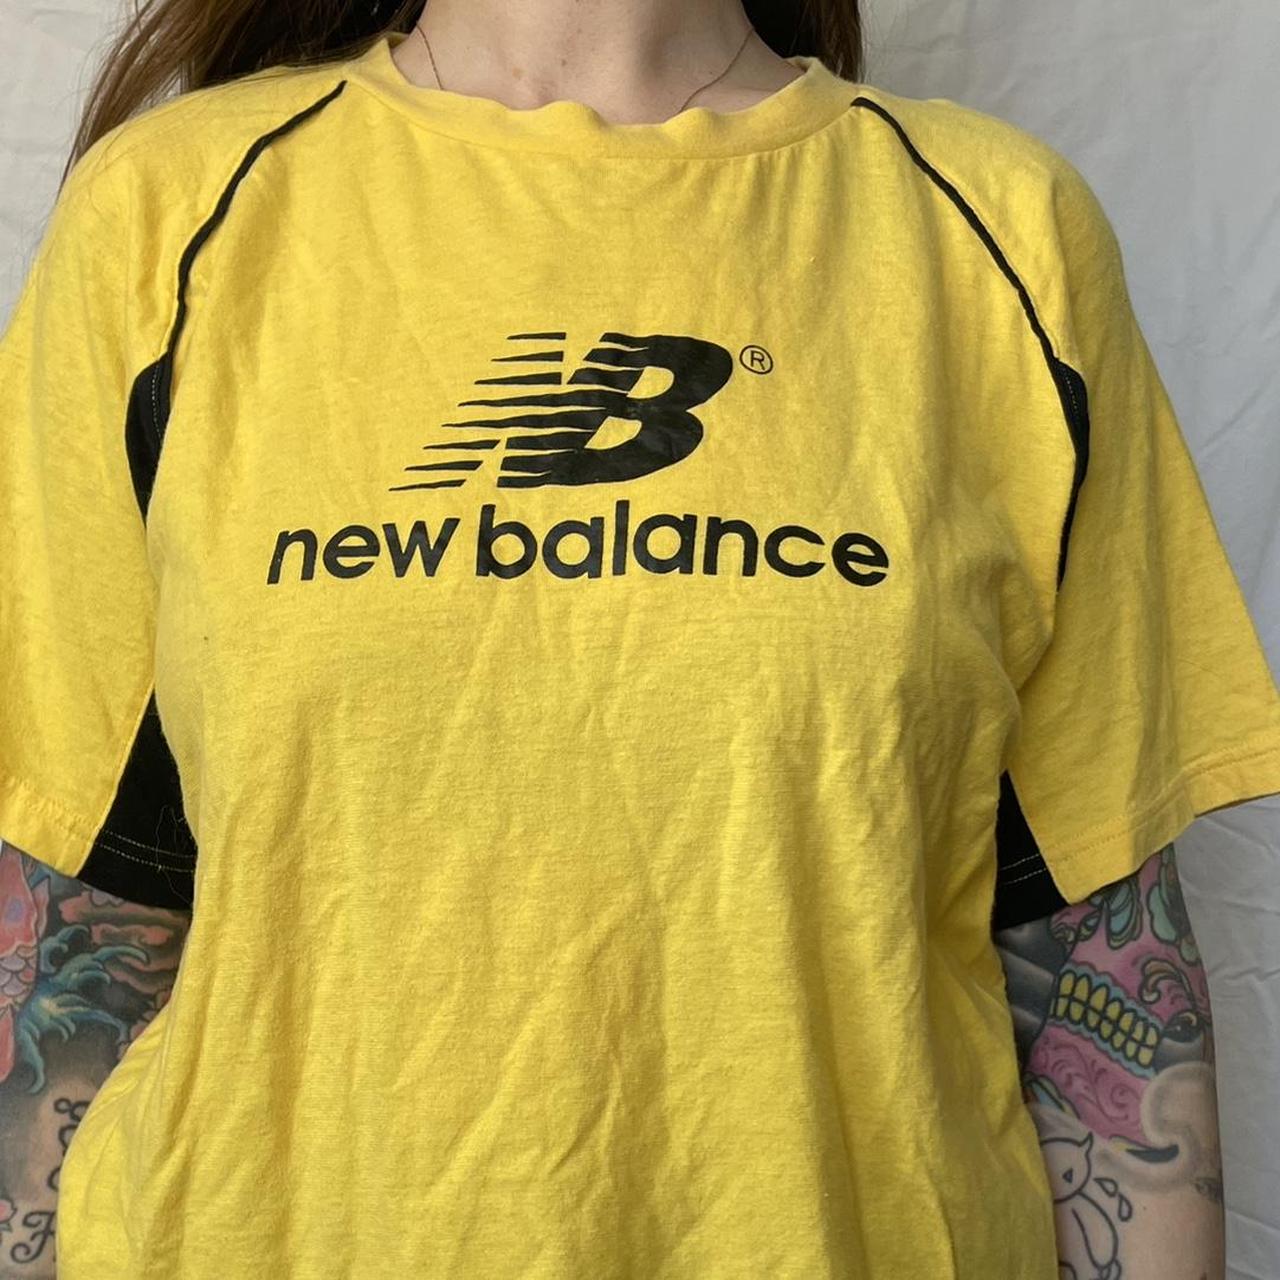 New Balance Men's Yellow and Black T-shirt | Depop